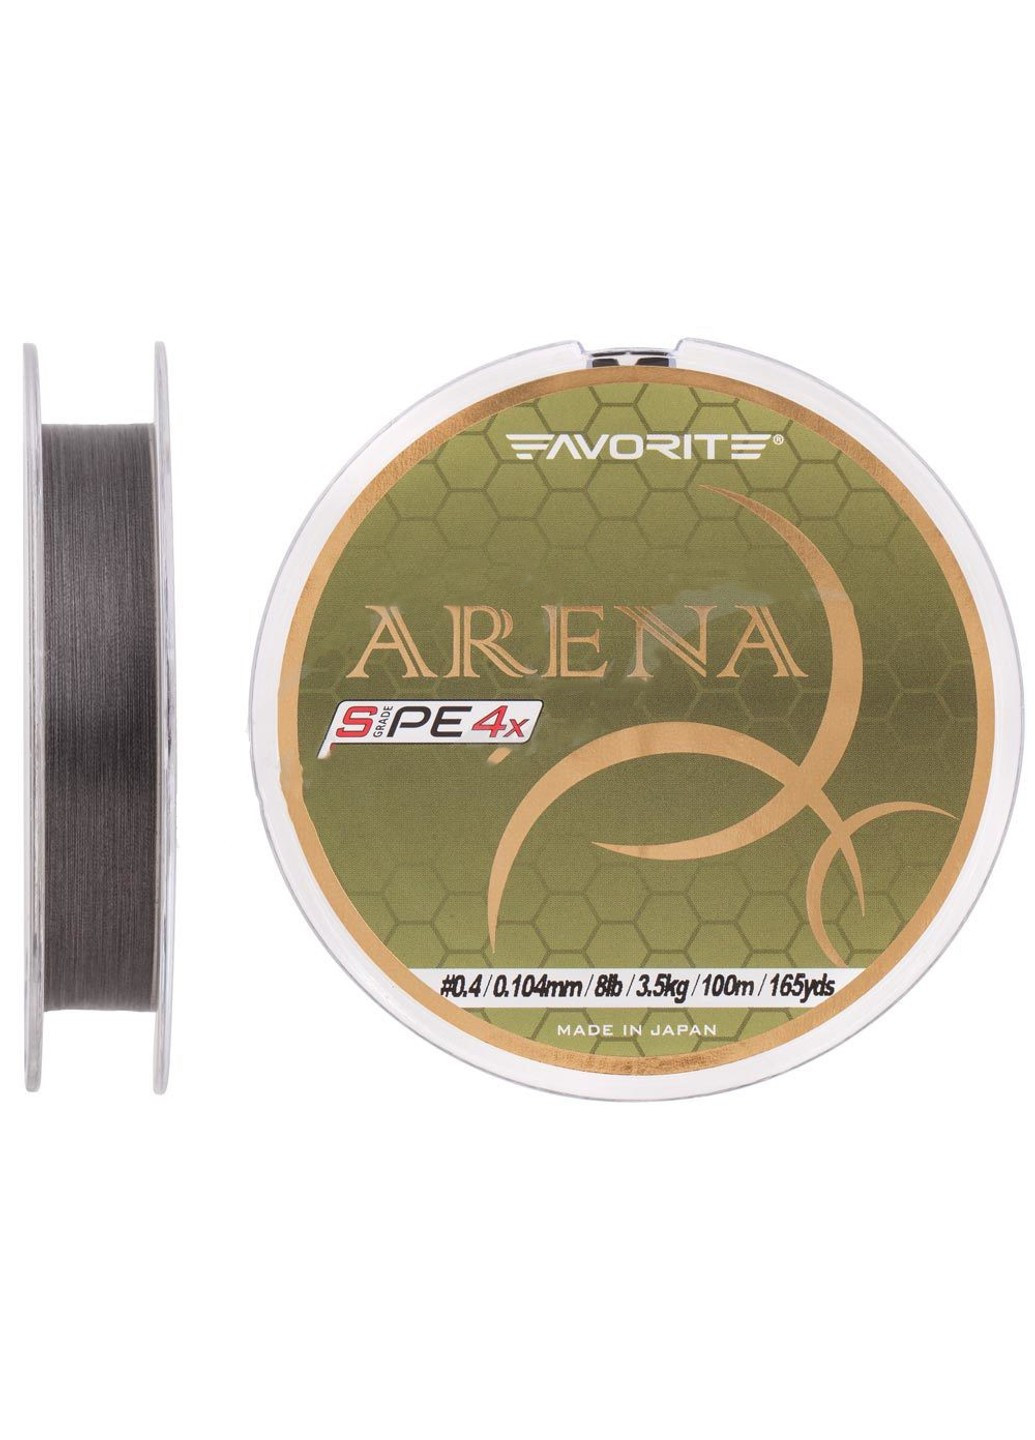 Шнур Arena PE 4x 100m (silver gray) #0.4/0.104mm 8lb/3.5kg (1693-10-95) Favorite (252468440)